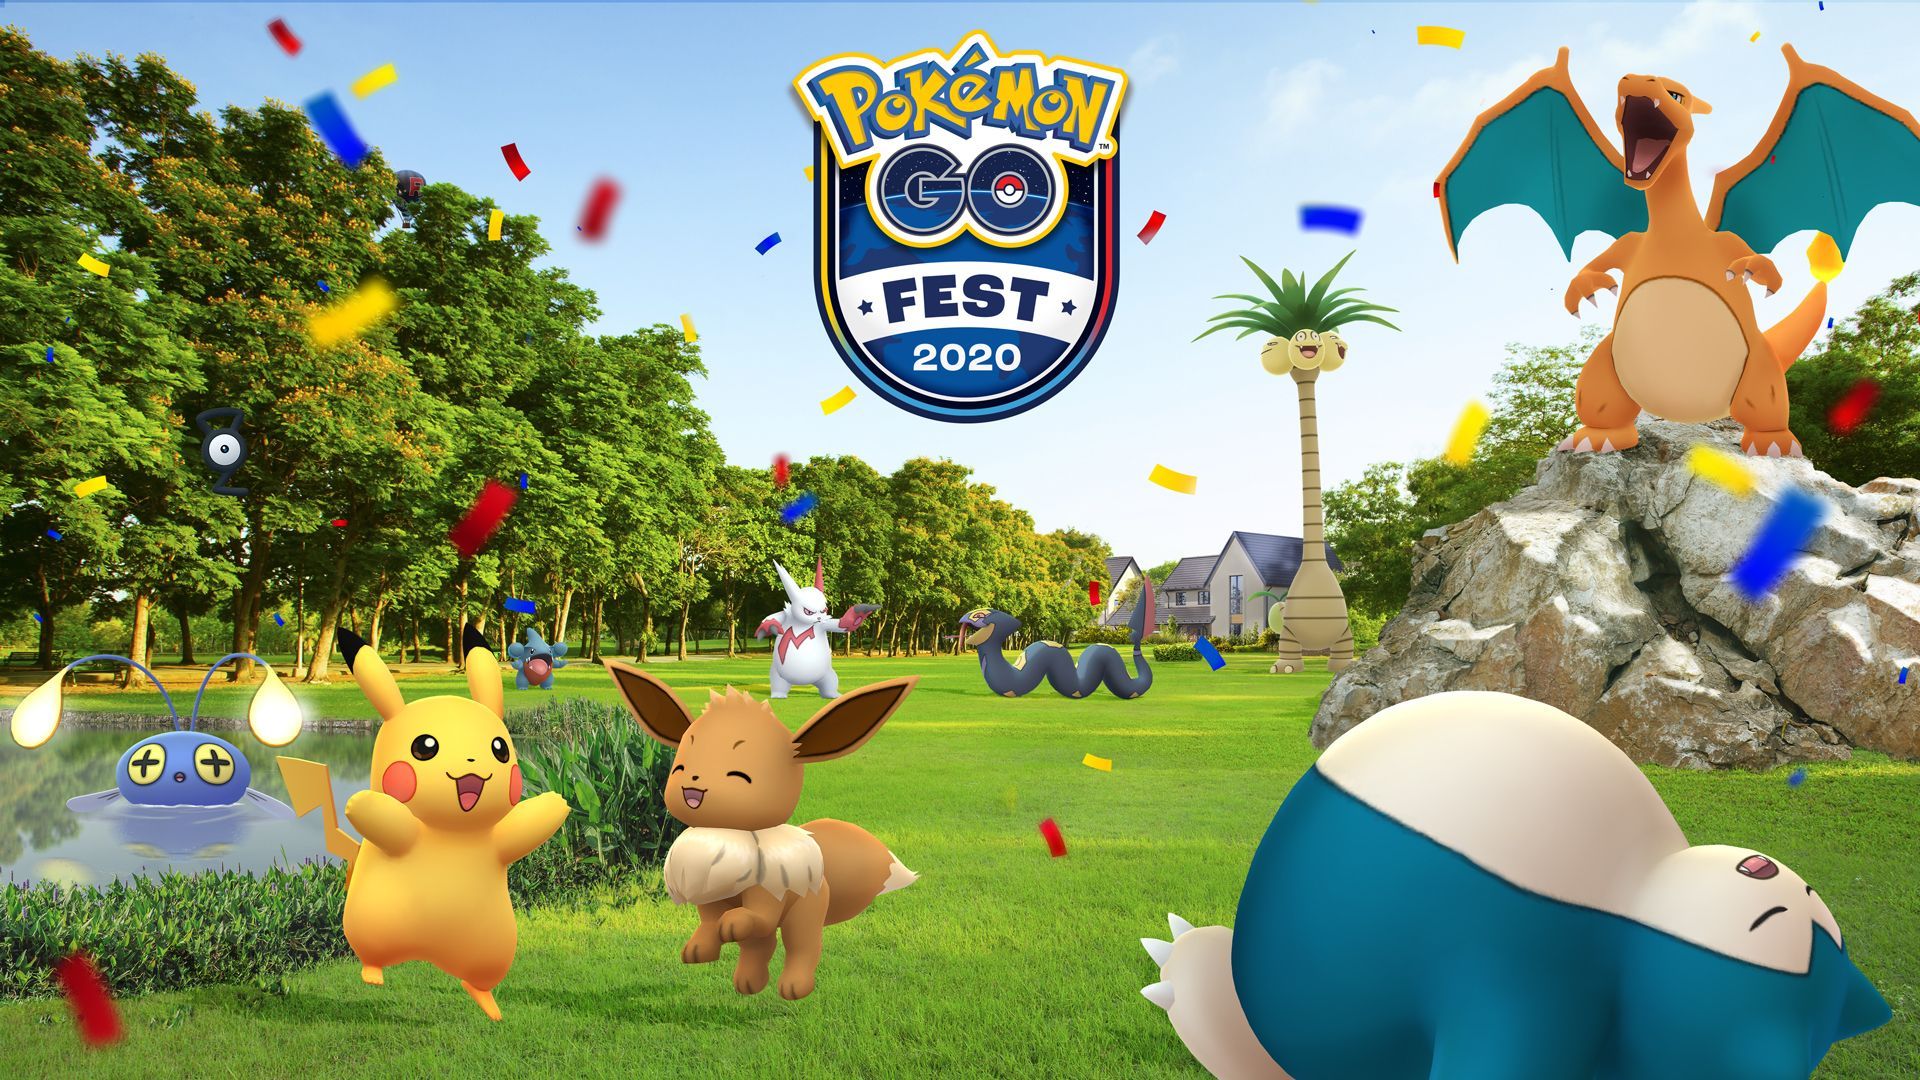 Friendship Go Fest Challenge tasks rewards Elite tasks and unlock goals in Pokémon Go explained